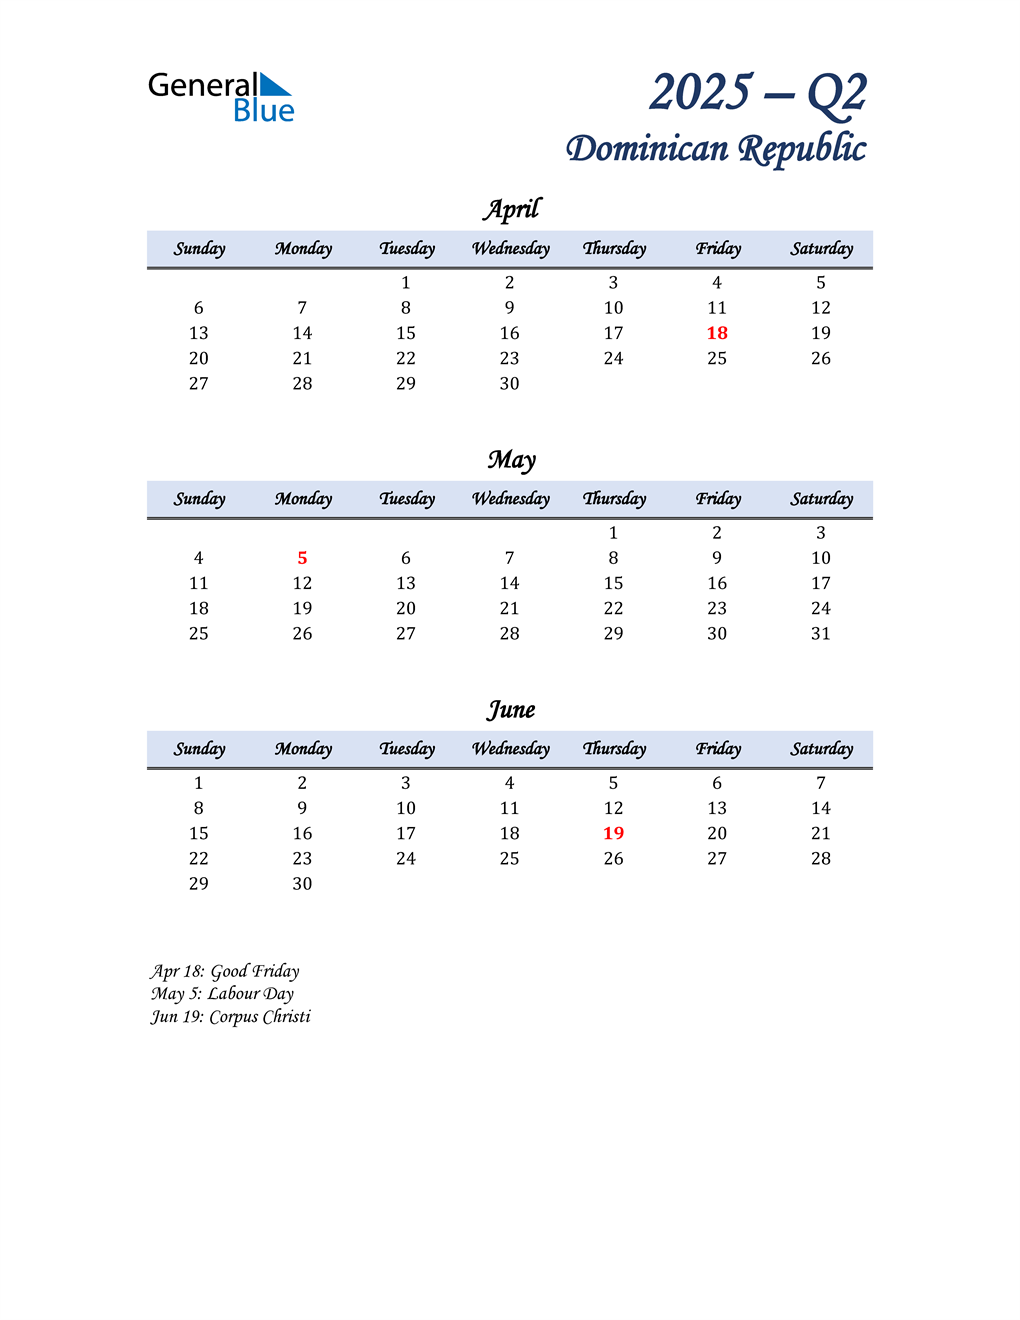  April, May, and June Calendar for Dominican Republic